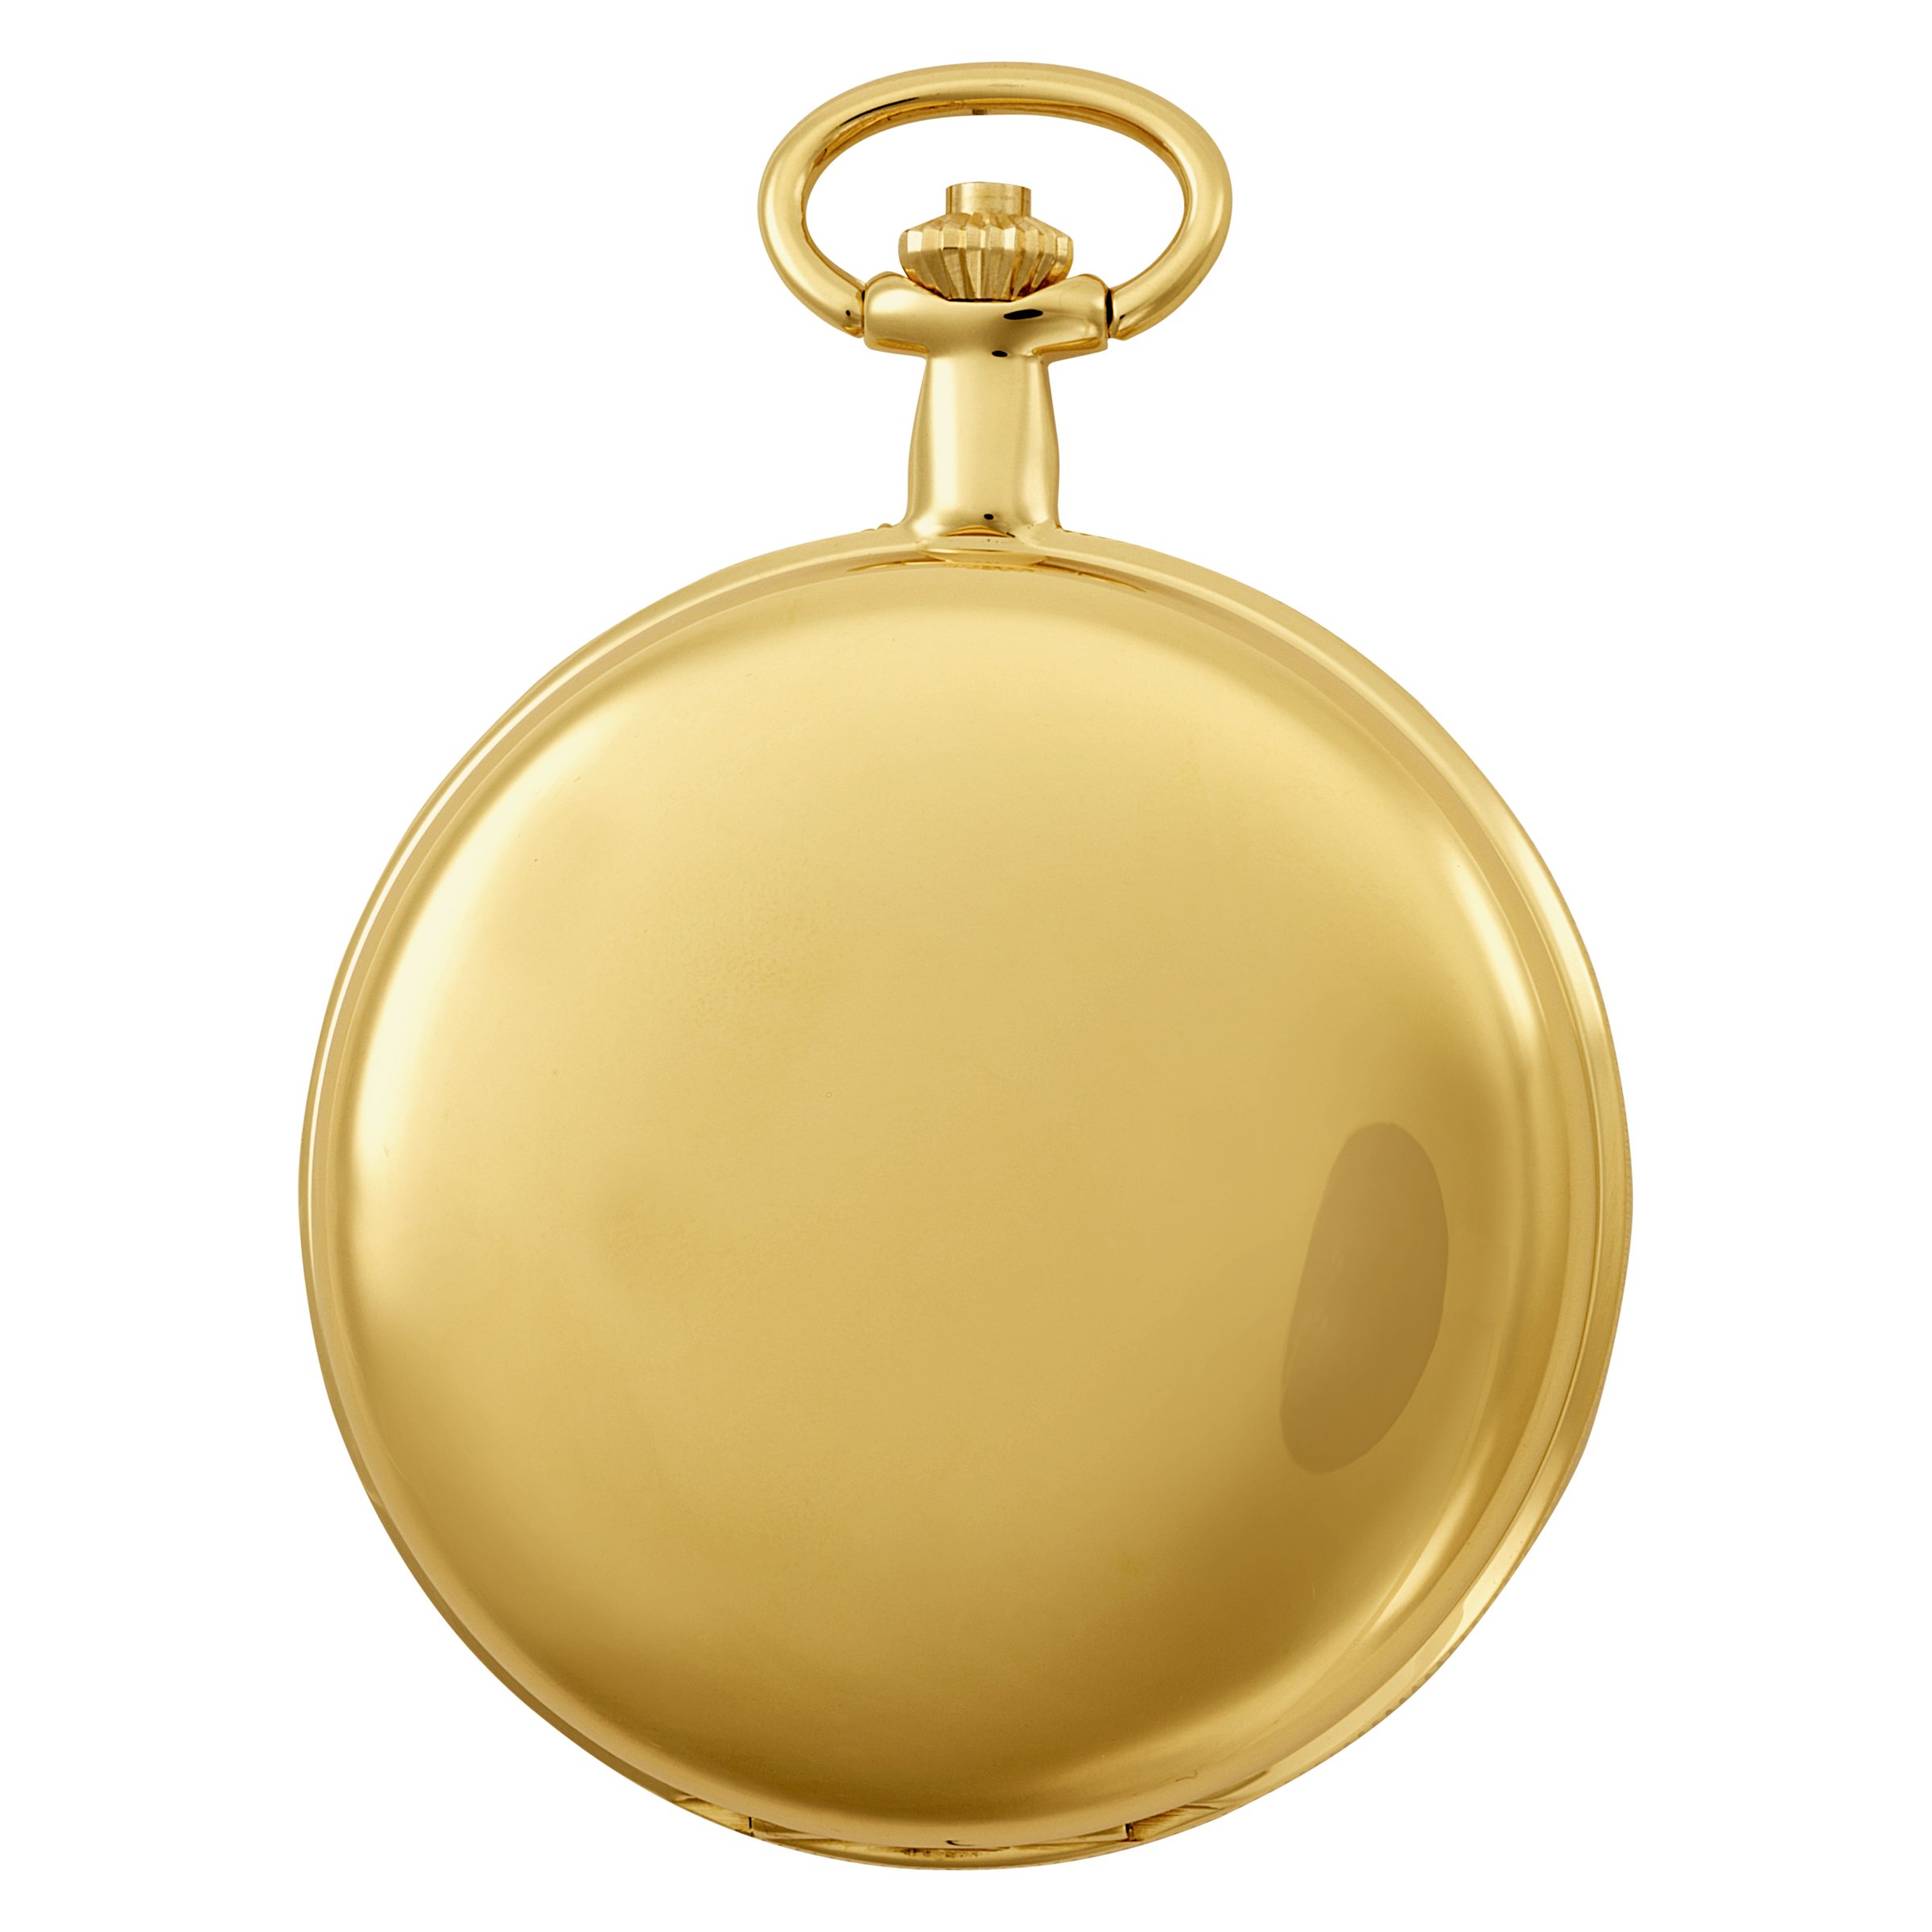 Charles-Hubert, Paris Gold-Plated Quartz Pocket Watch